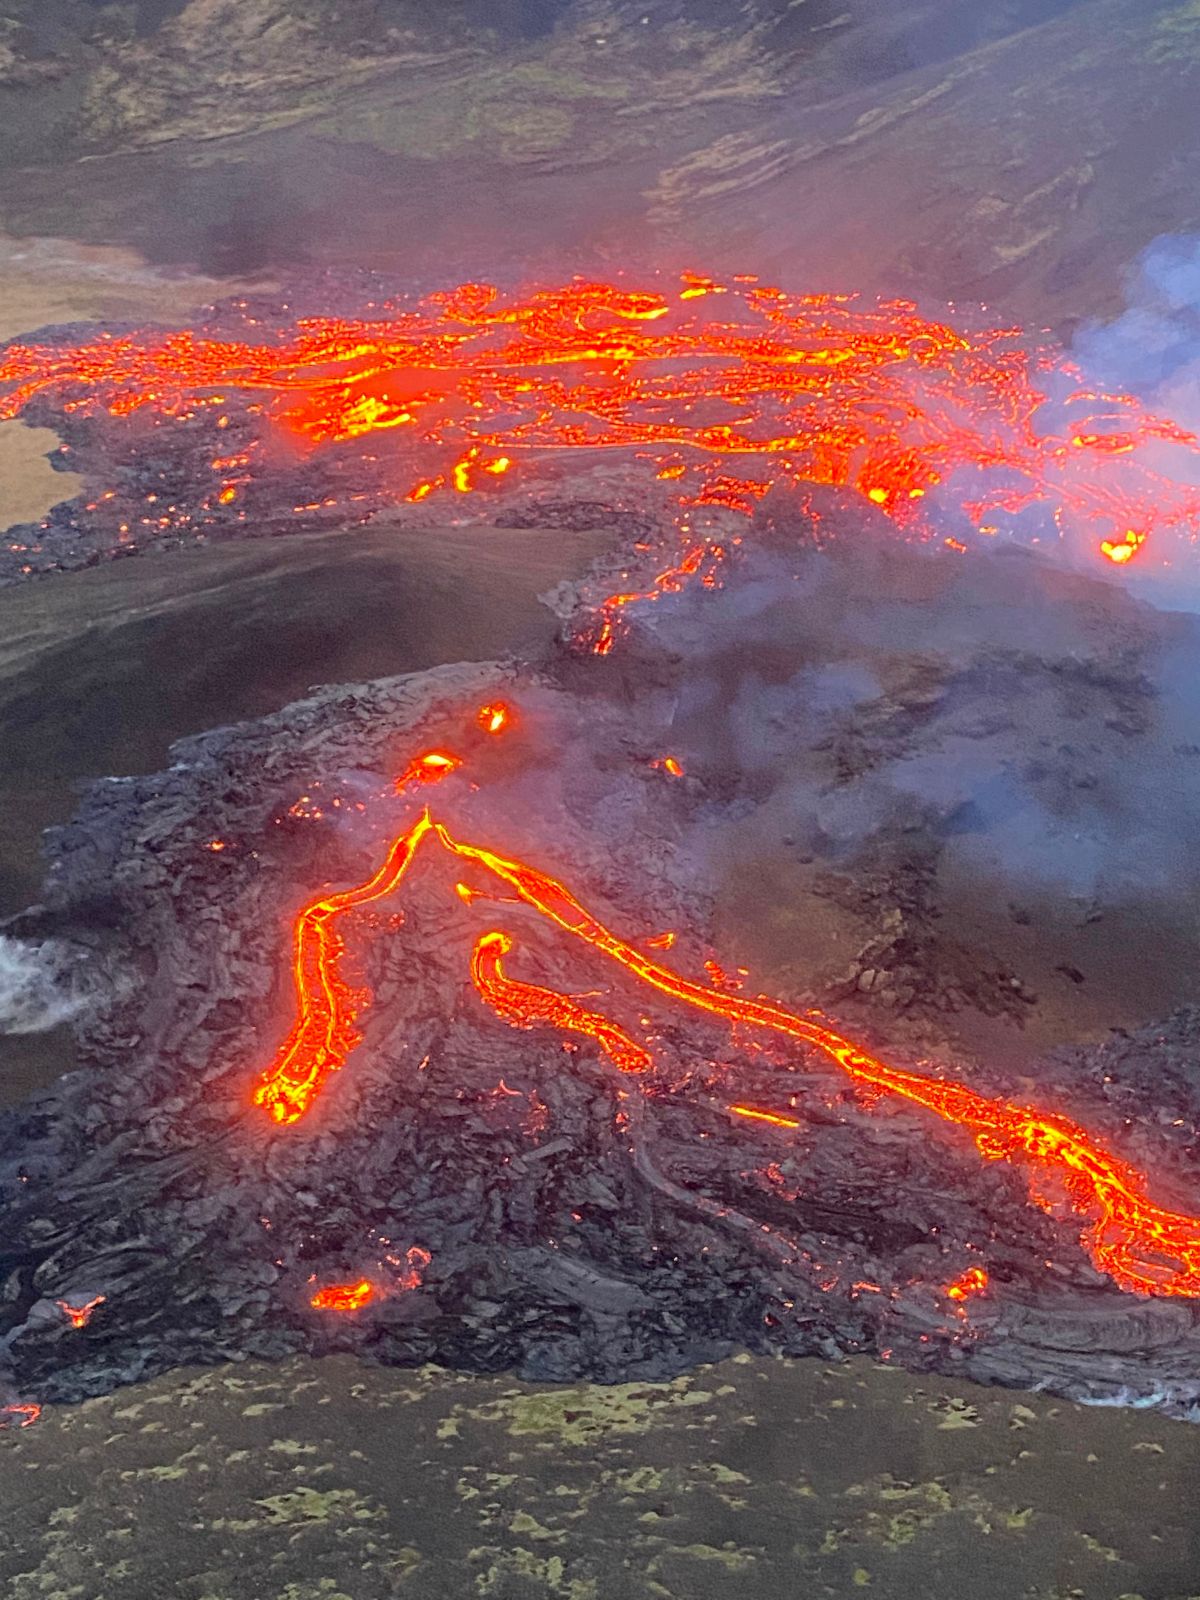 Icelandic Coast Guard captures Fagradalsfjall volcano eruption after 800 years of inactivity